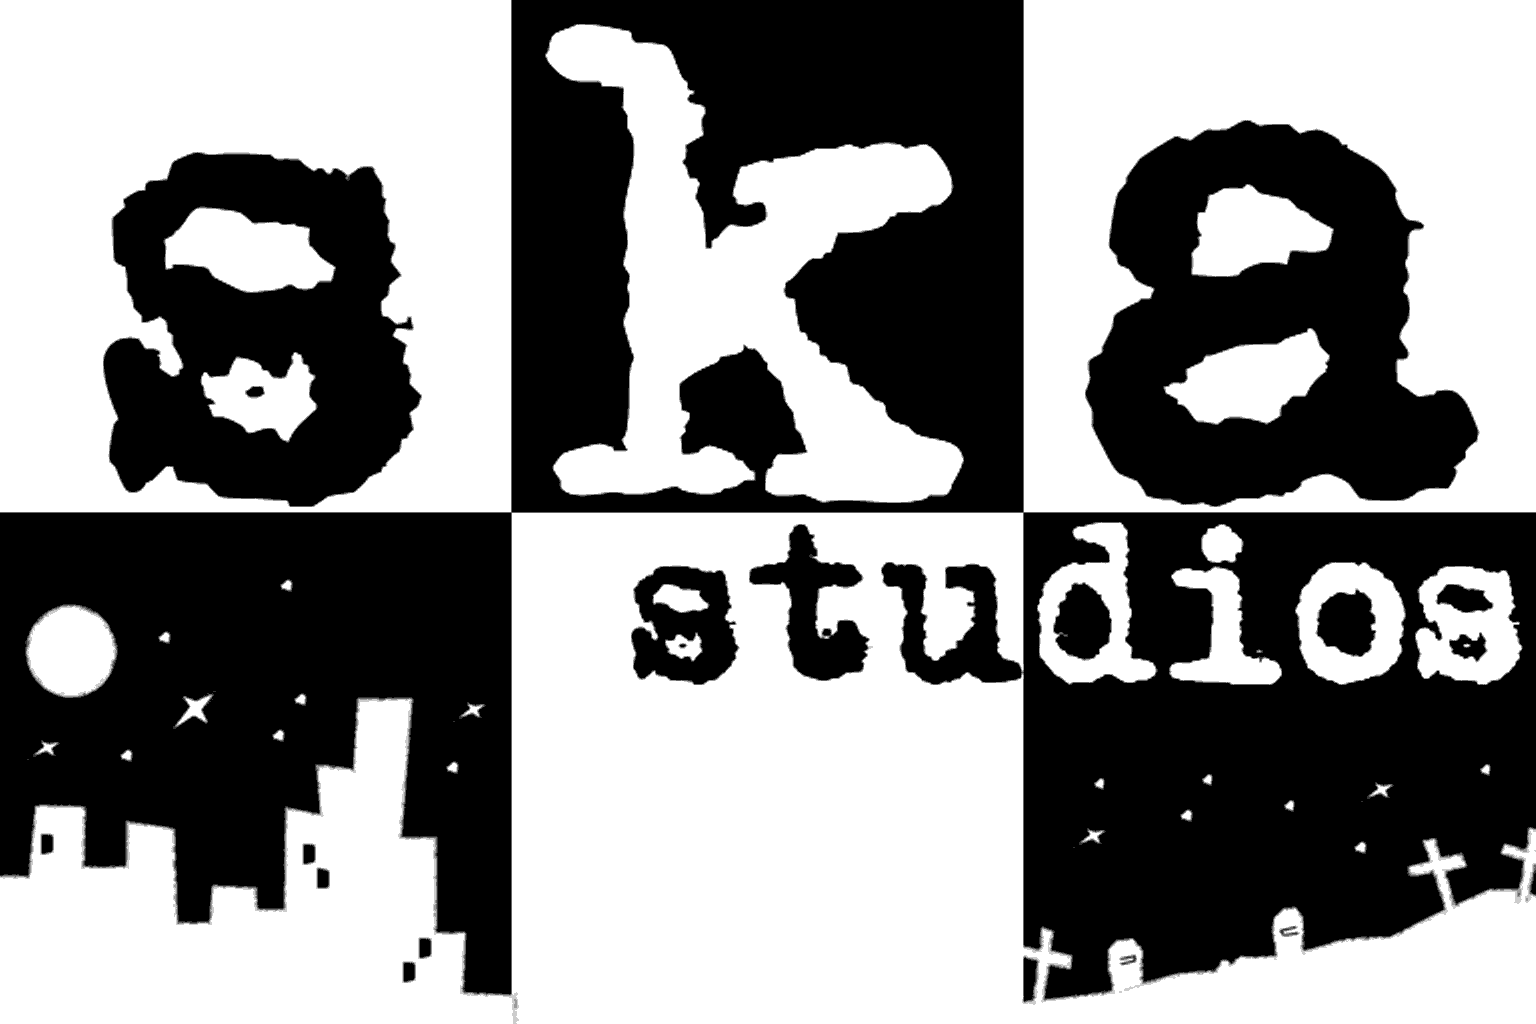 “Working with Microsoft is great” says XBLA developer Ska Studios